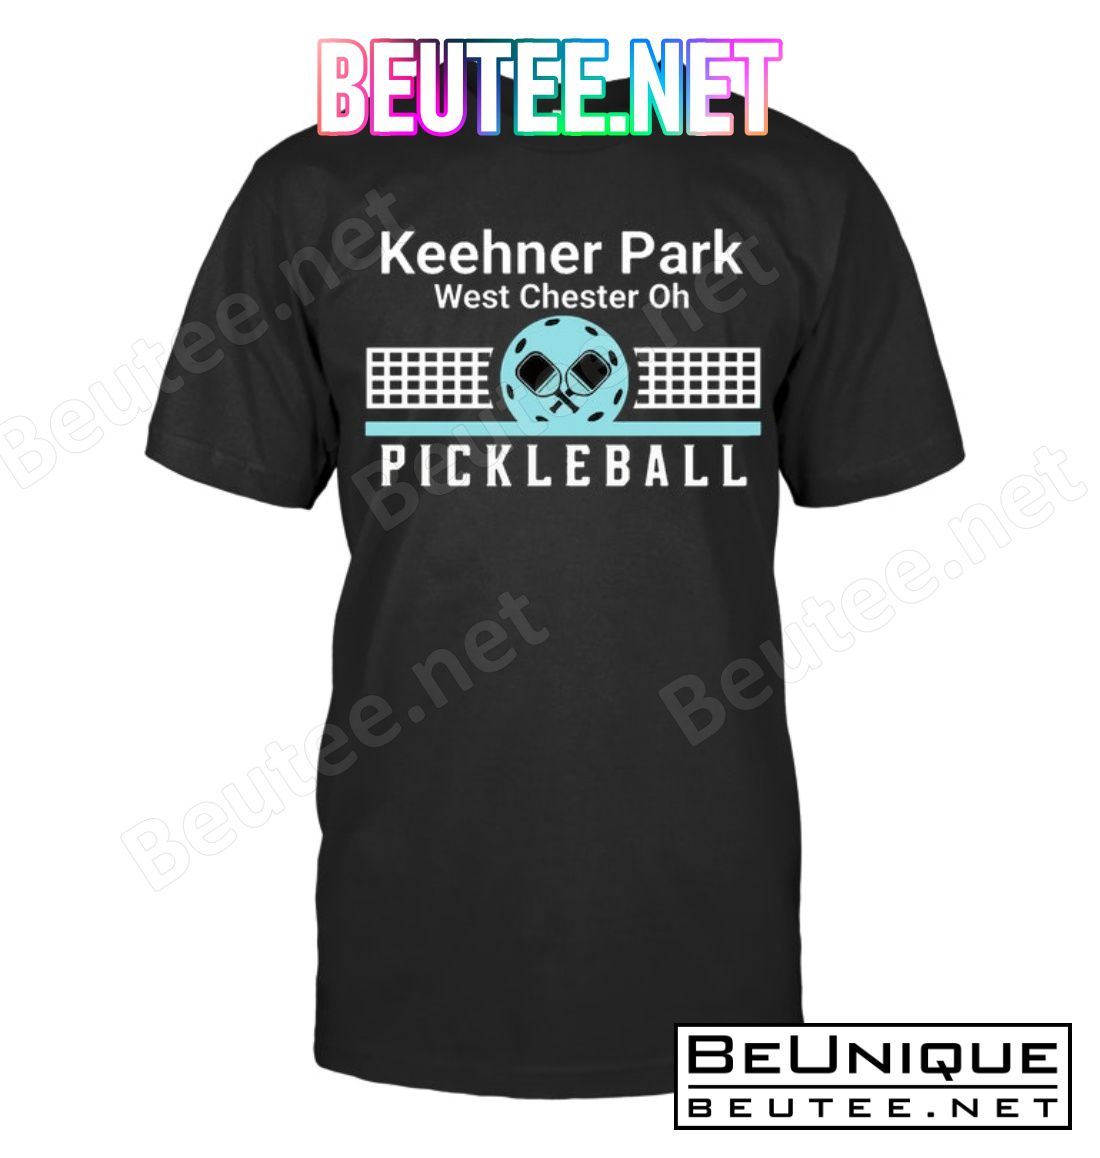 Keehner Park West Chester Oh Pickleball Shirt